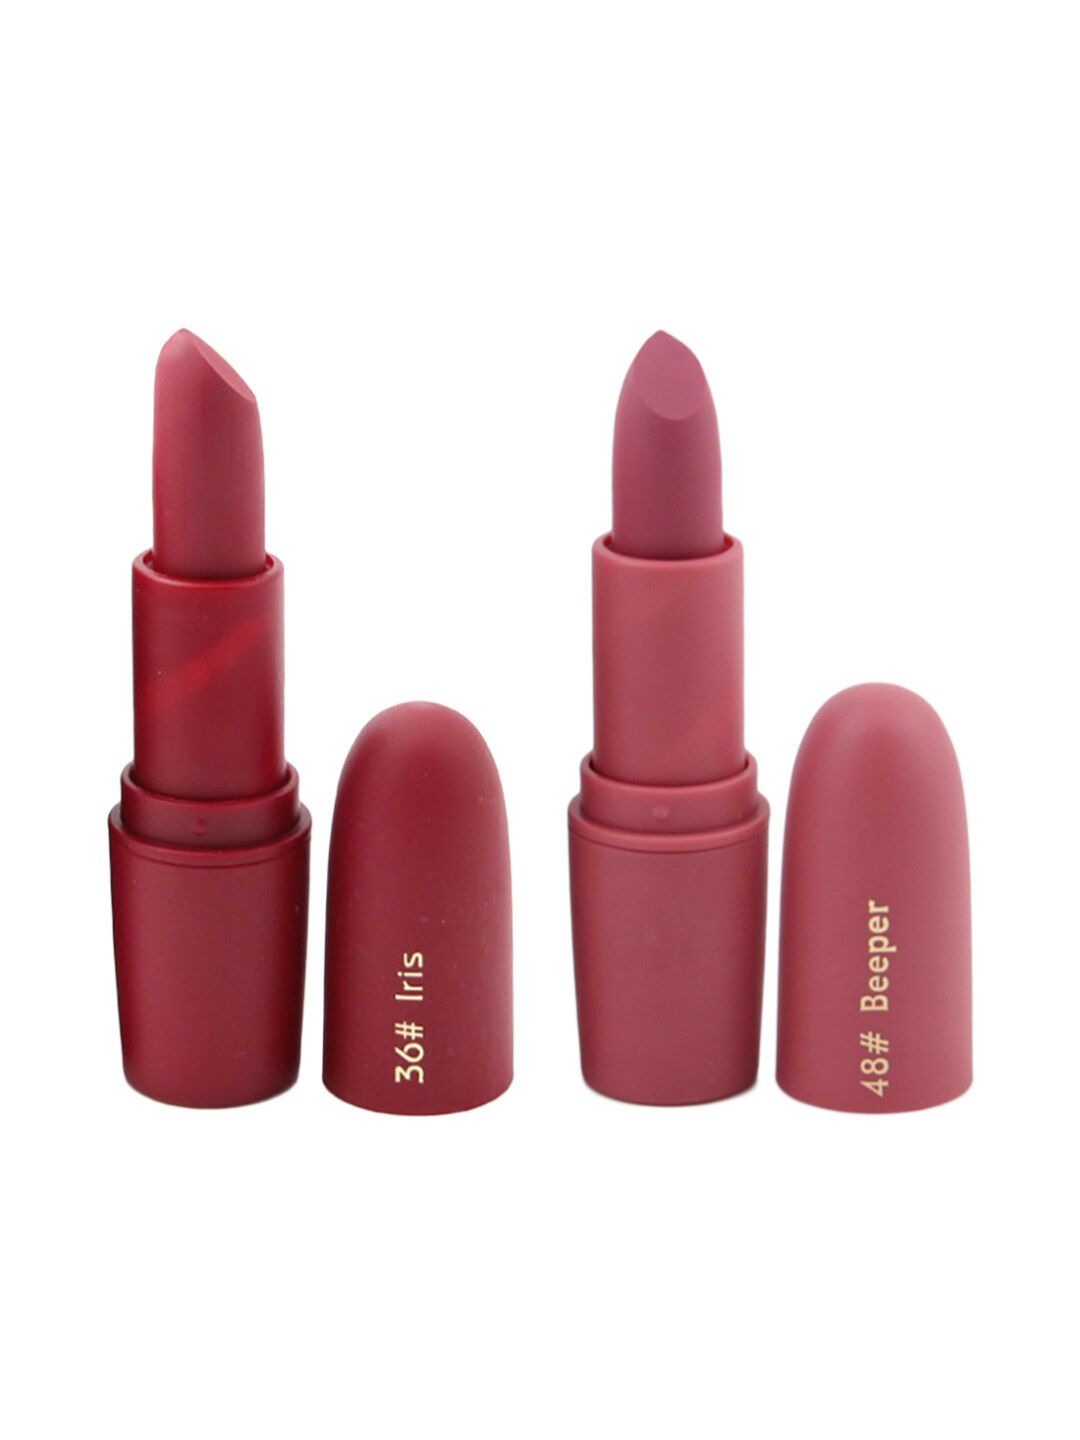 MISS ROSE Professional Make-Up Set of 2 Matte Creamy Lipsticks - Iris 36 & Beeper 48 Price in India